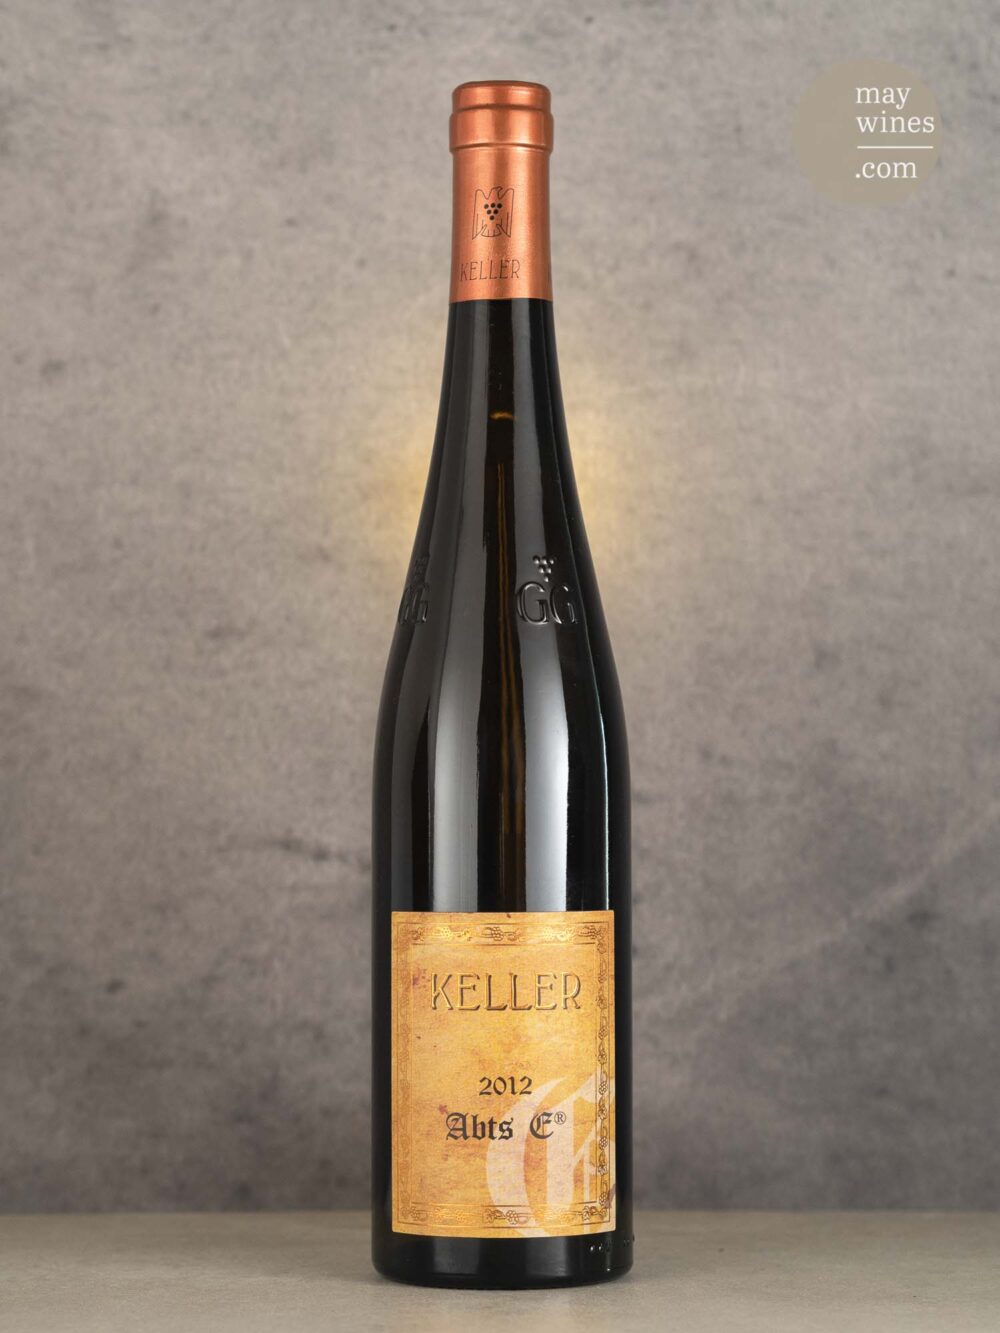 May Wines – Weißwein – 2012 Abtserde GG - Keller